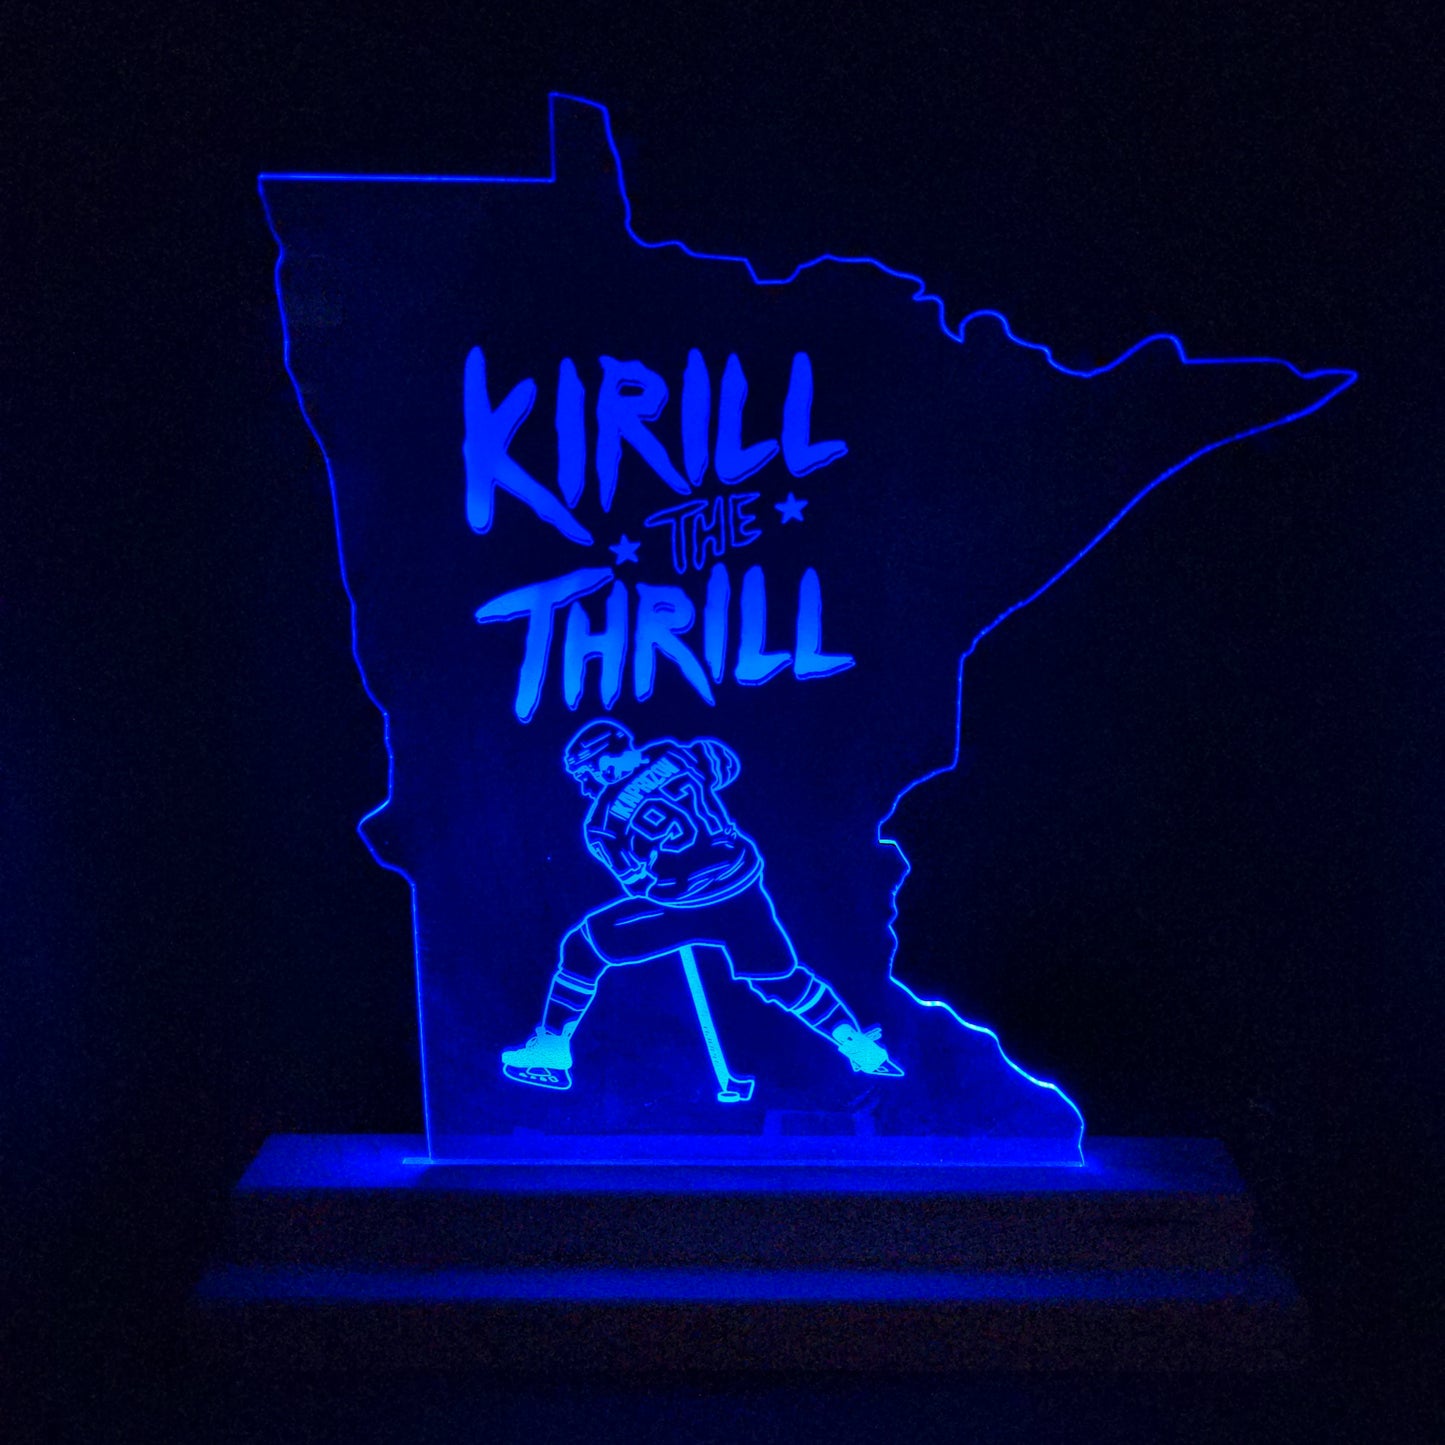 Kirill the Thrill (standard LED)